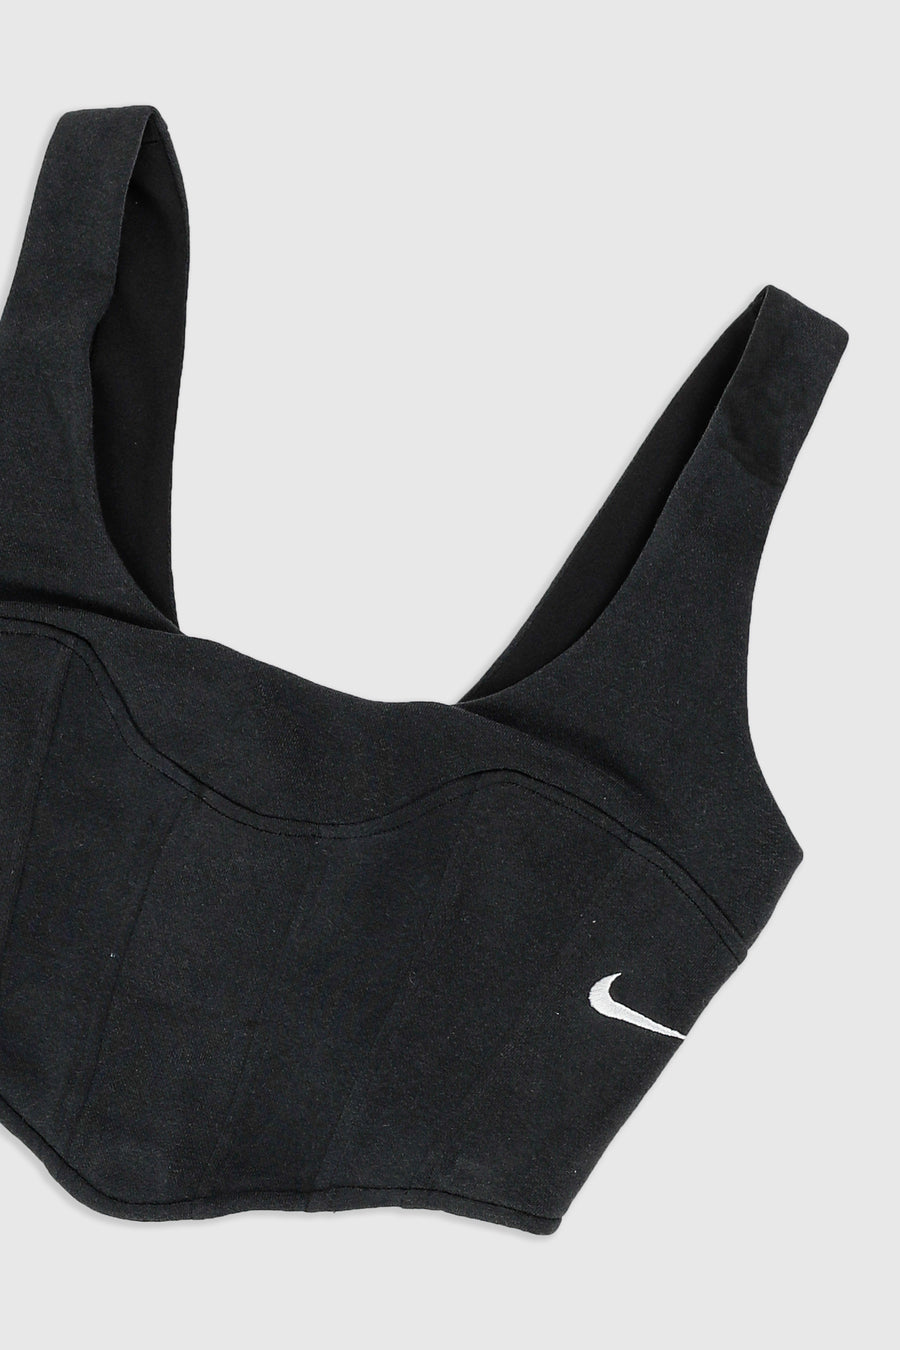 Rework Nike Sweatshirt Bustier - S